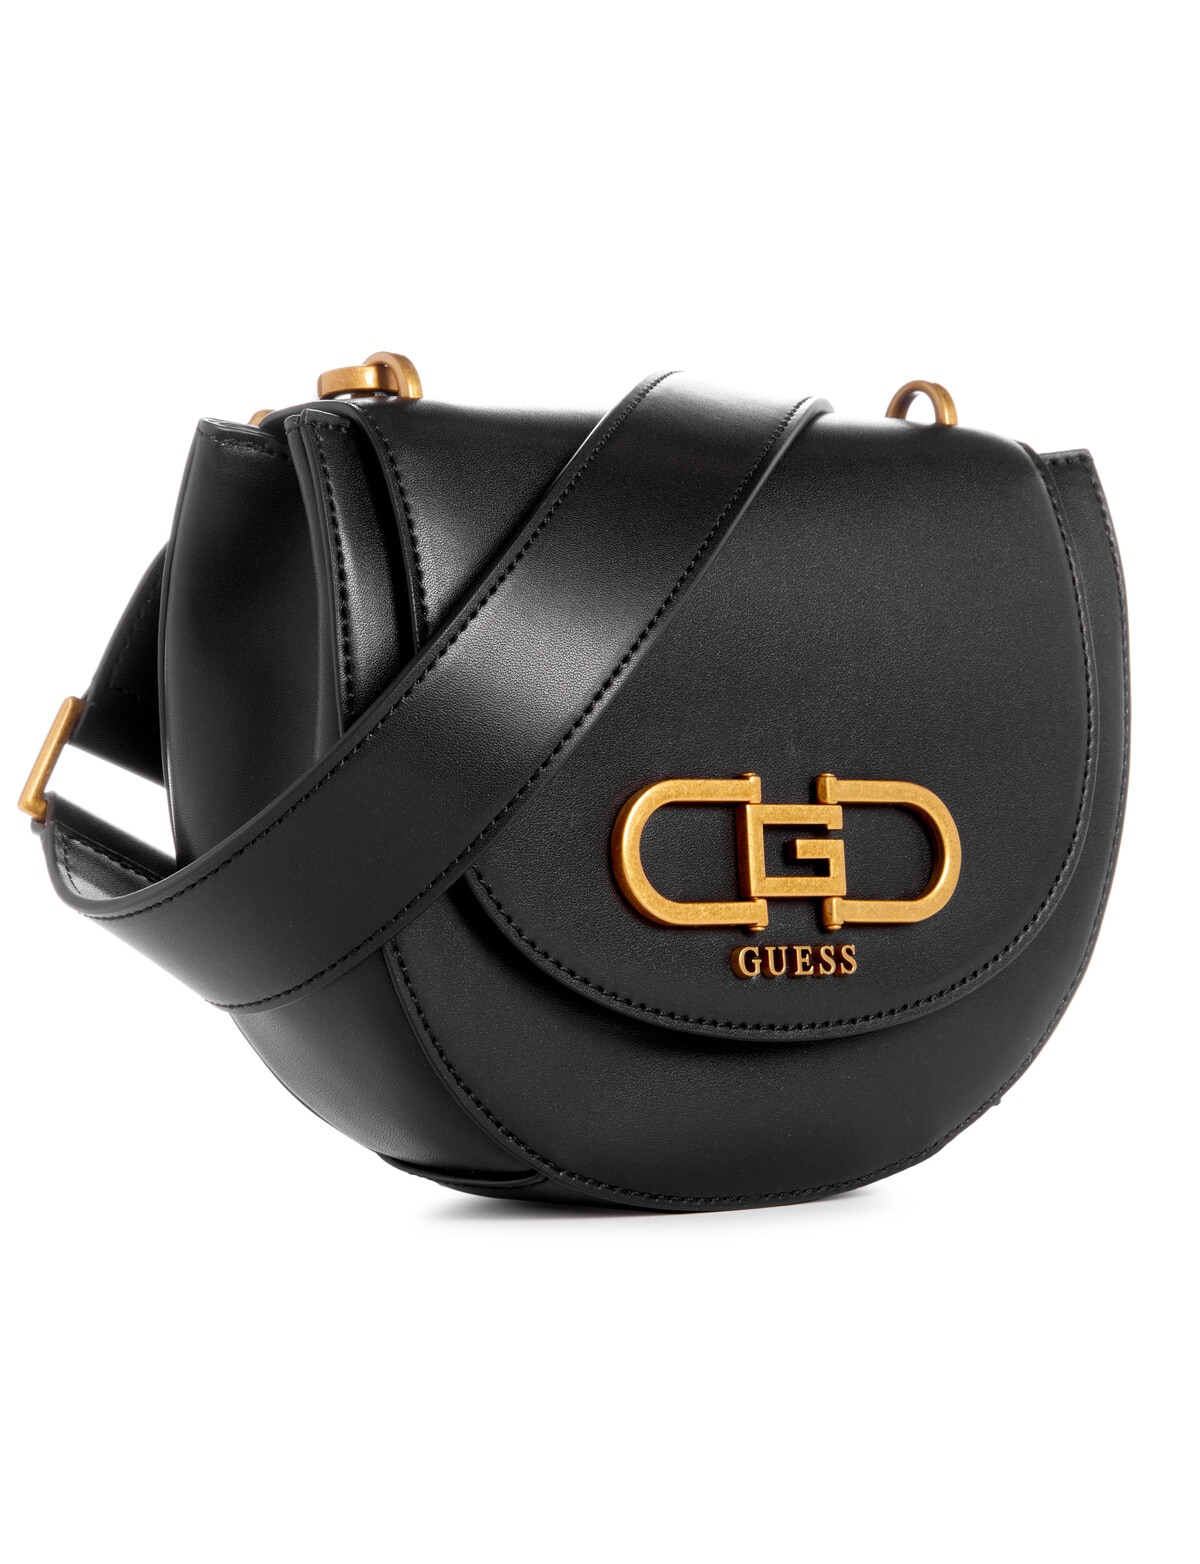 Buy Women's Guess bag Top Handle Flap Handbag 929 (CS654)